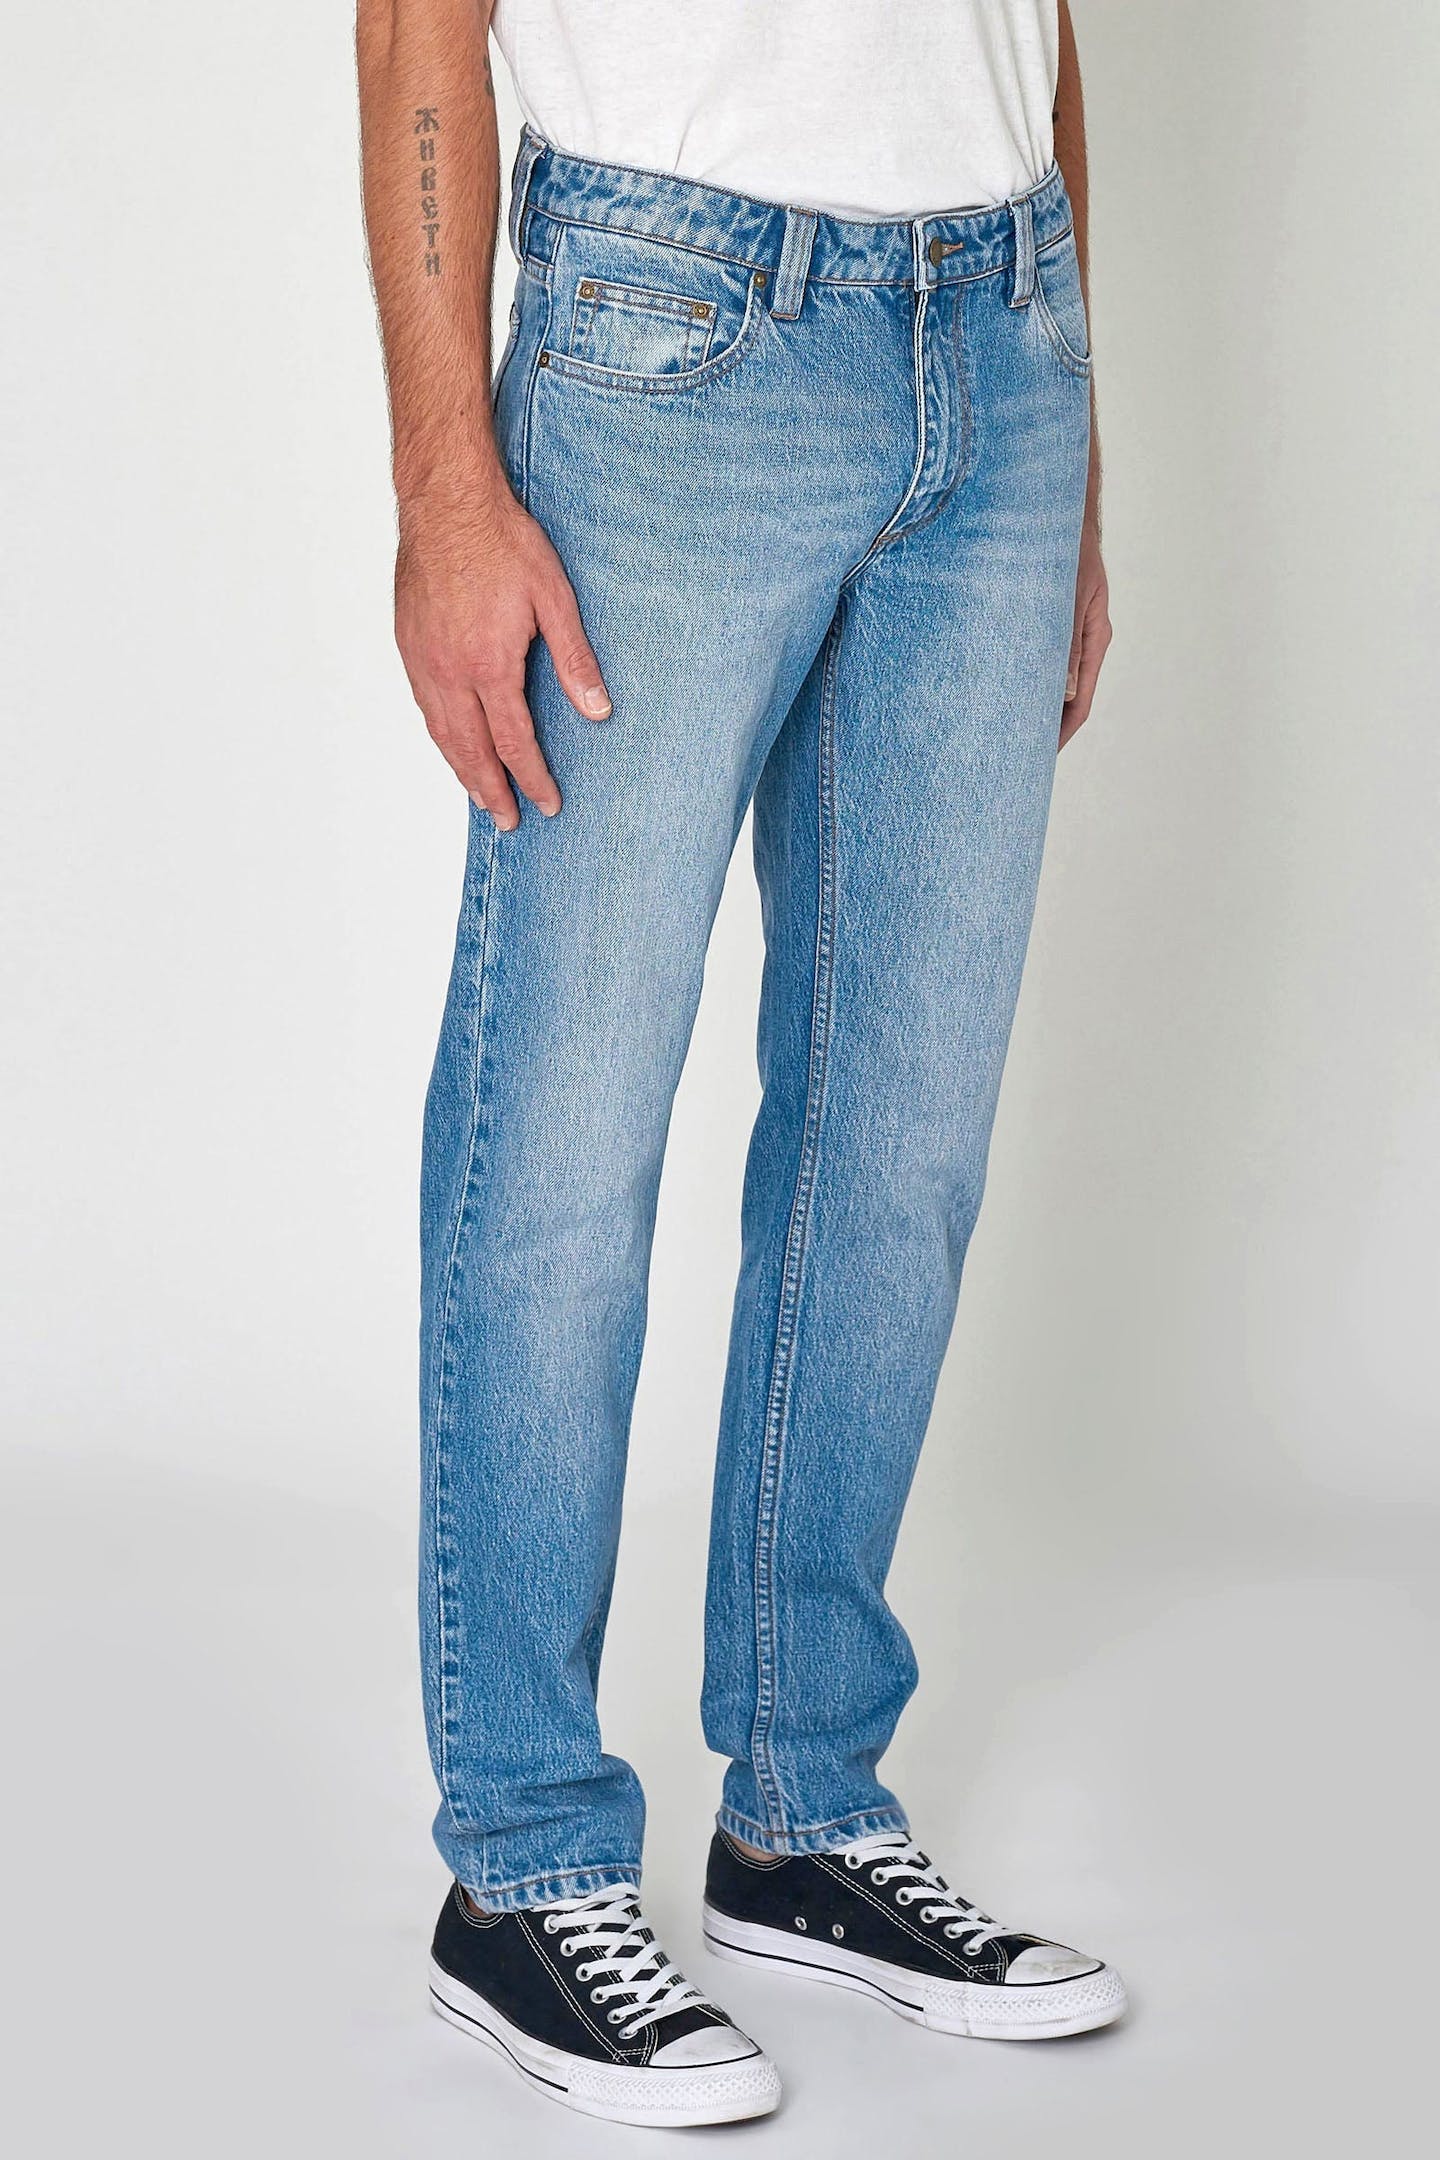 Rolla's - Tim Slims Slim Fit Jeans